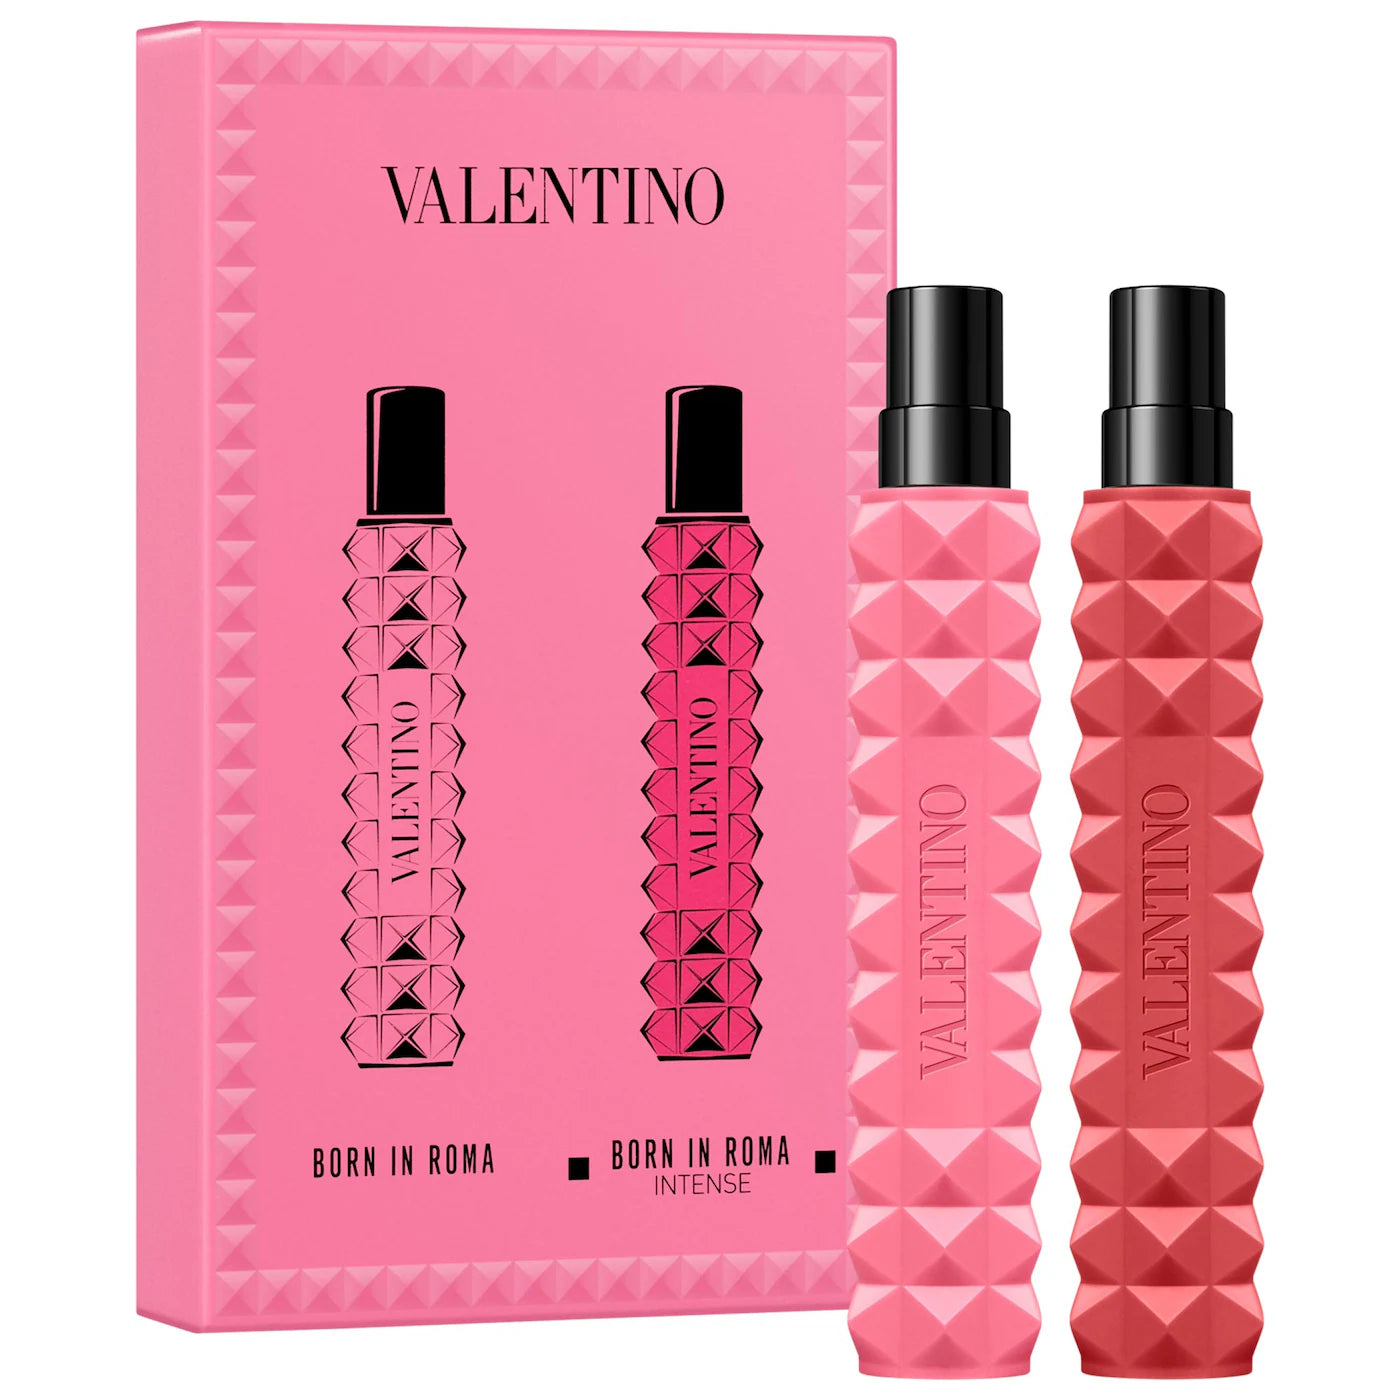 Valentino Beauty Donna Born in Roma & Born in Roma Intense Eau de Parfum Travel Spray Set